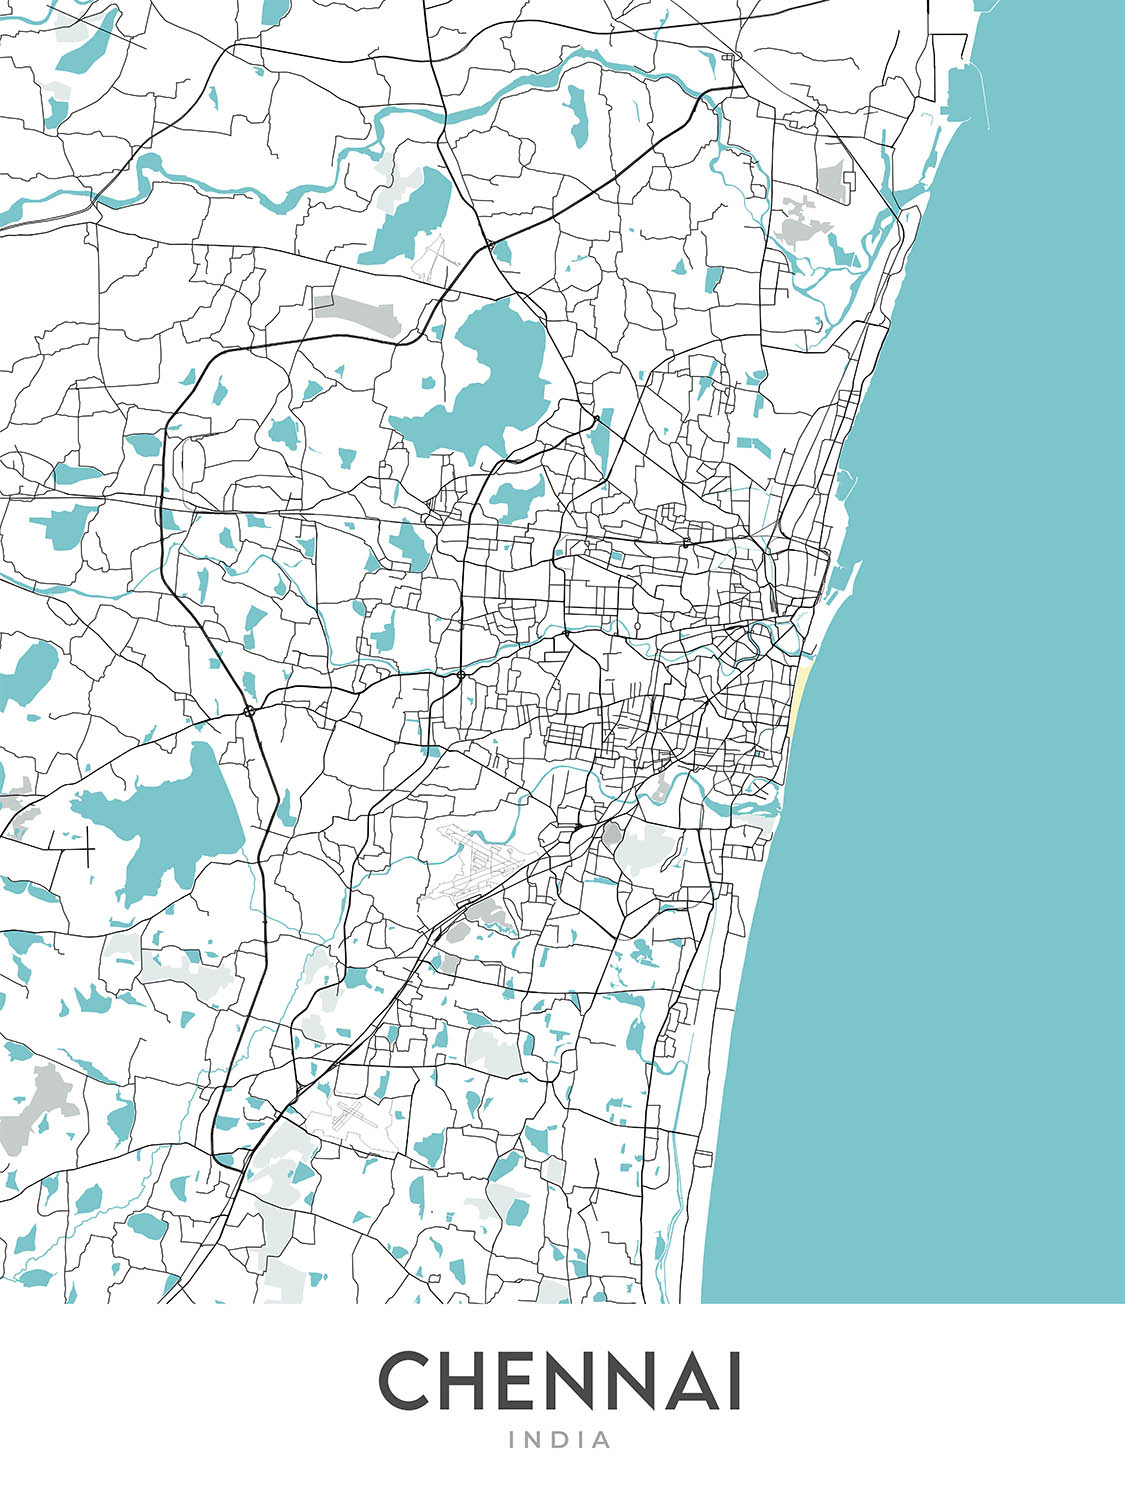 Modern City Map of Chennai, India: Marina Beach, Fort St. George, T. Nagar, Anna Salai, Mylapore